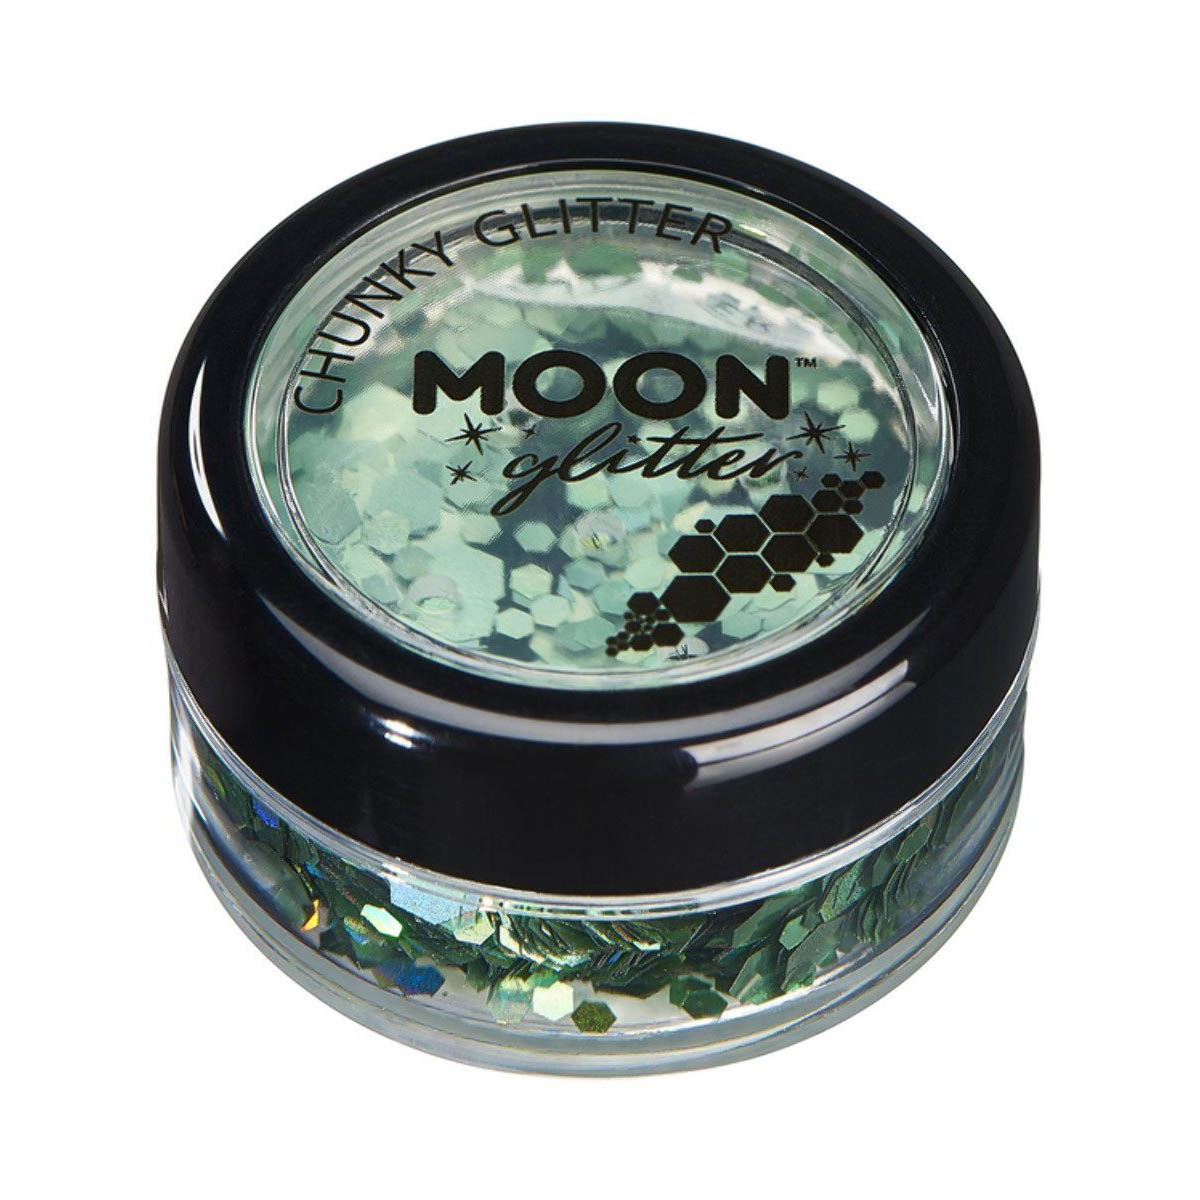 Moon glitter i burk, chunky holografisk 3g Grön